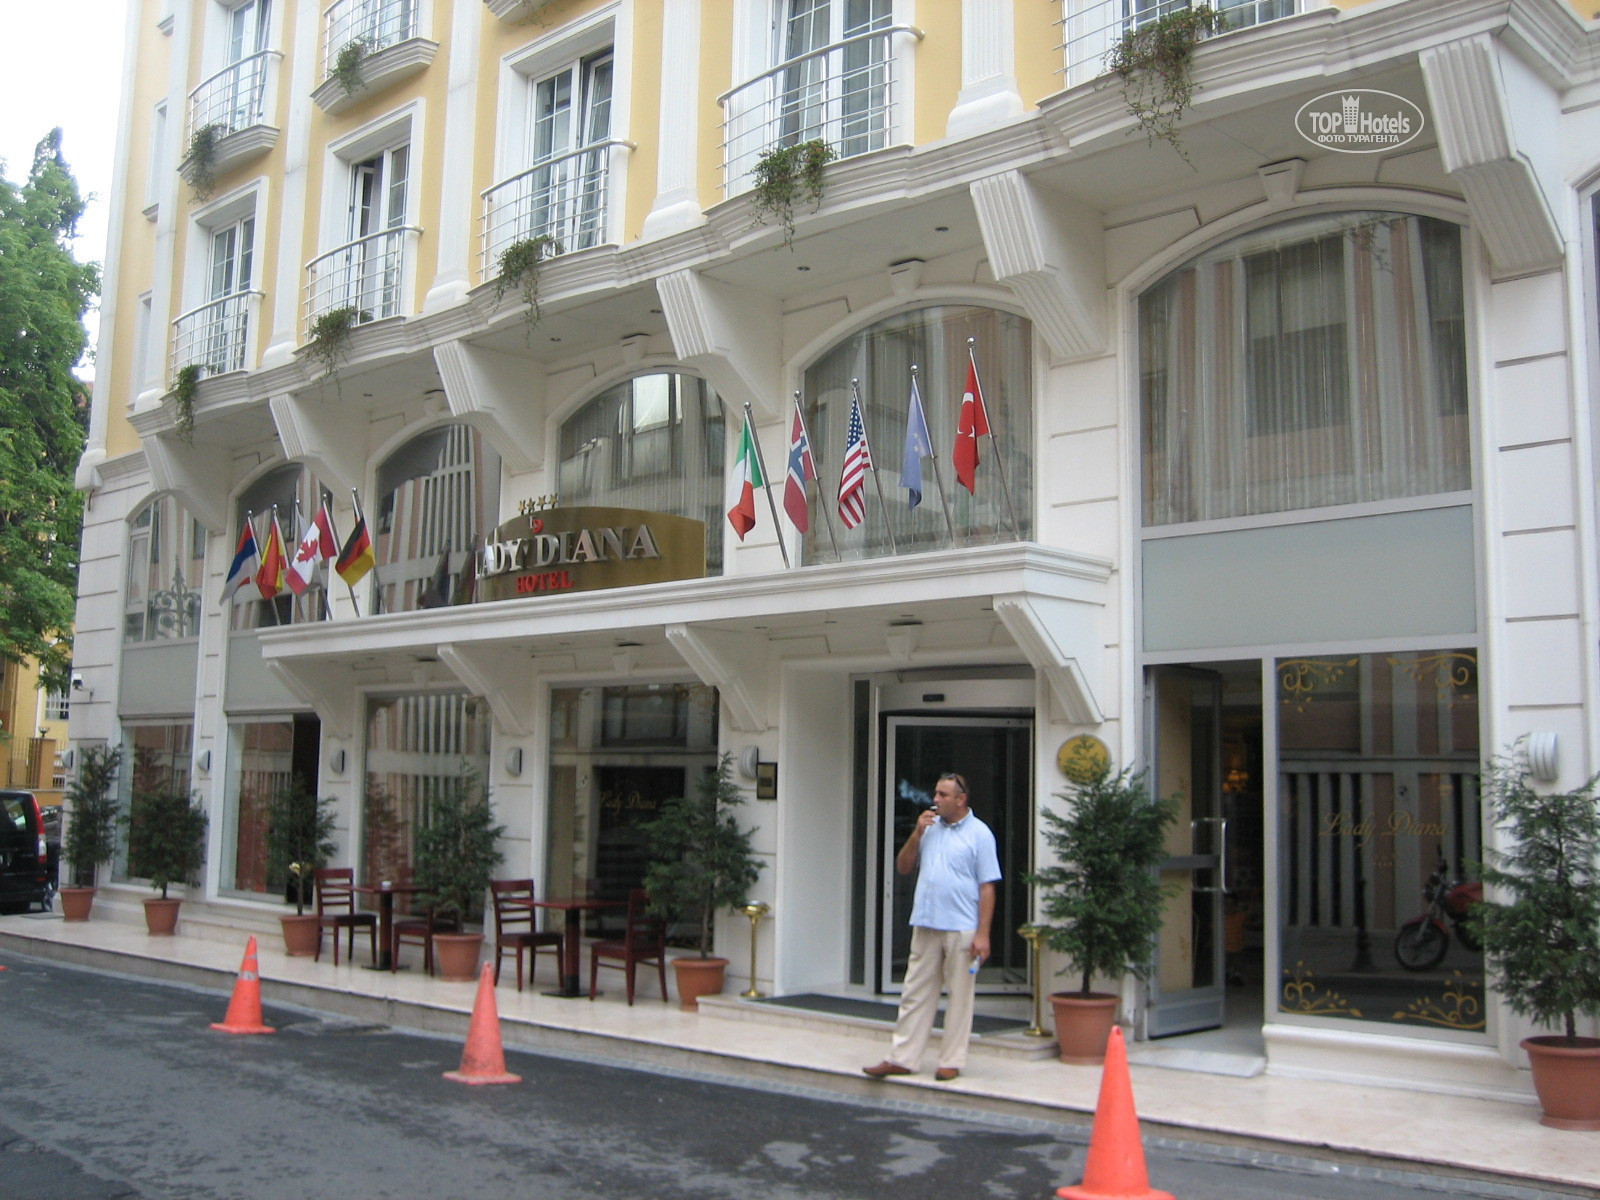 Lady diana стамбул. Турция Стамбул Lady Diana 4*. Lady Diana Hotel 4* (Султанахмет).